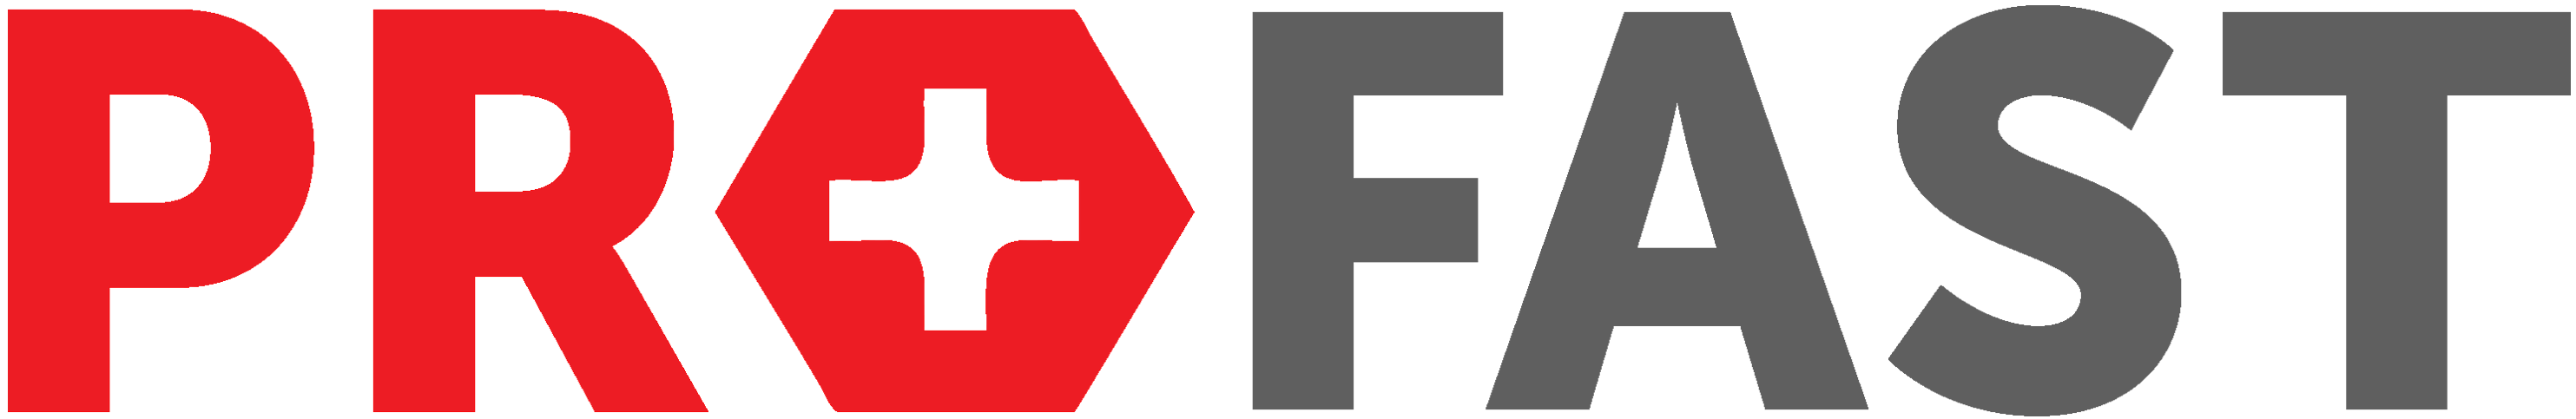 Profast Logo